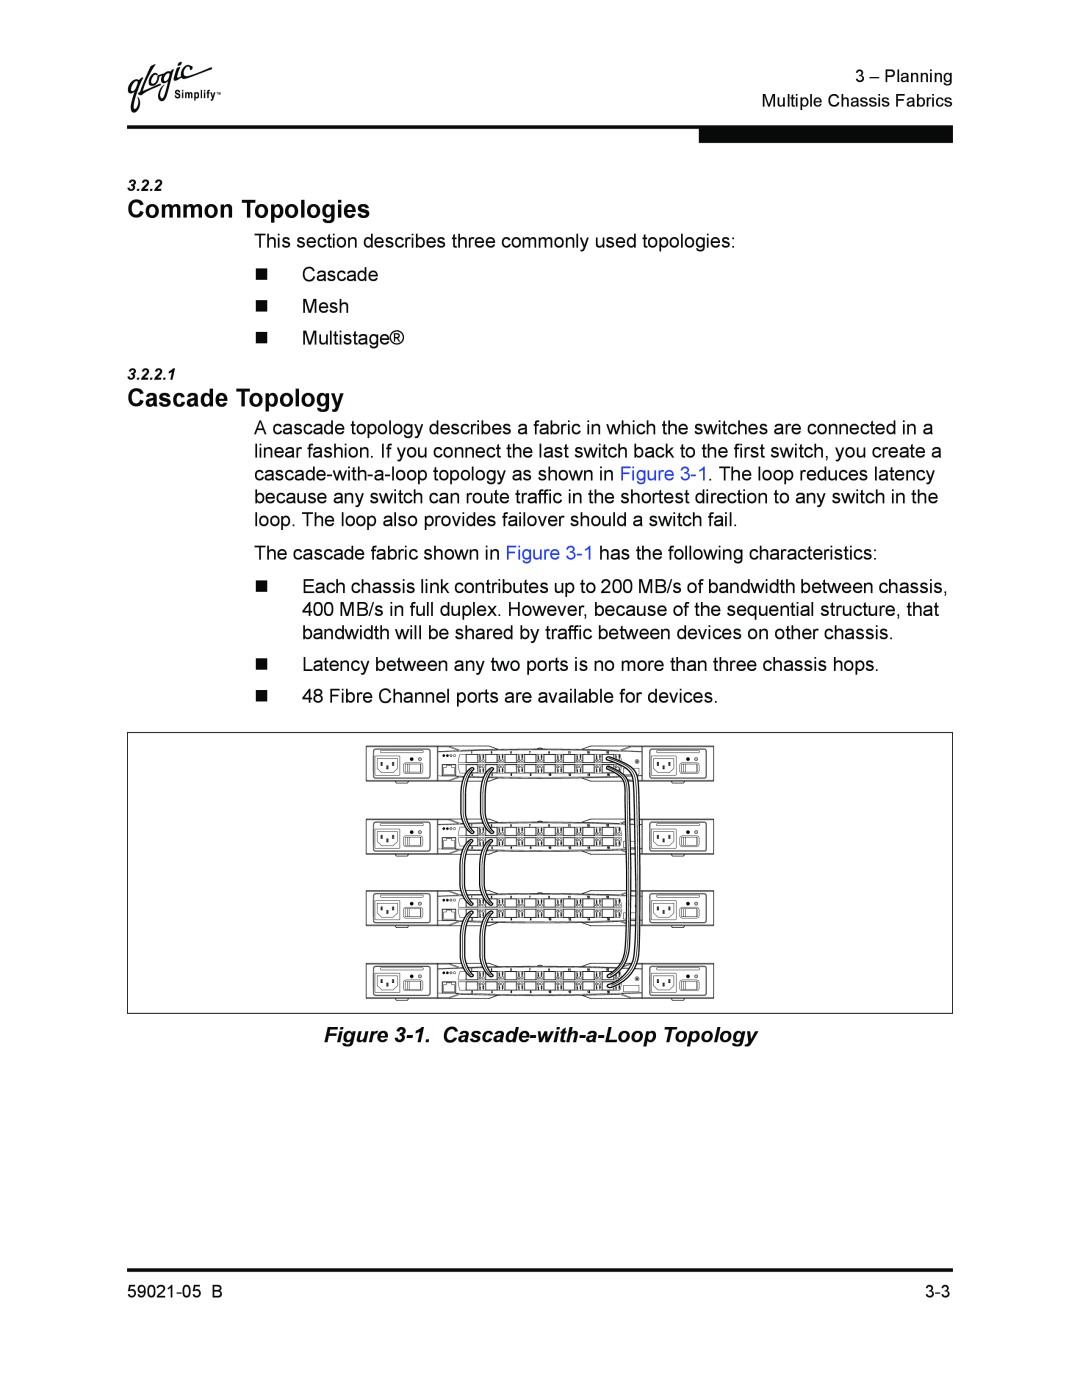 Q-Logic 59021-05 B manual Common Topologies, Cascade Topology, 1. Cascade-with-a-Loop Topology 